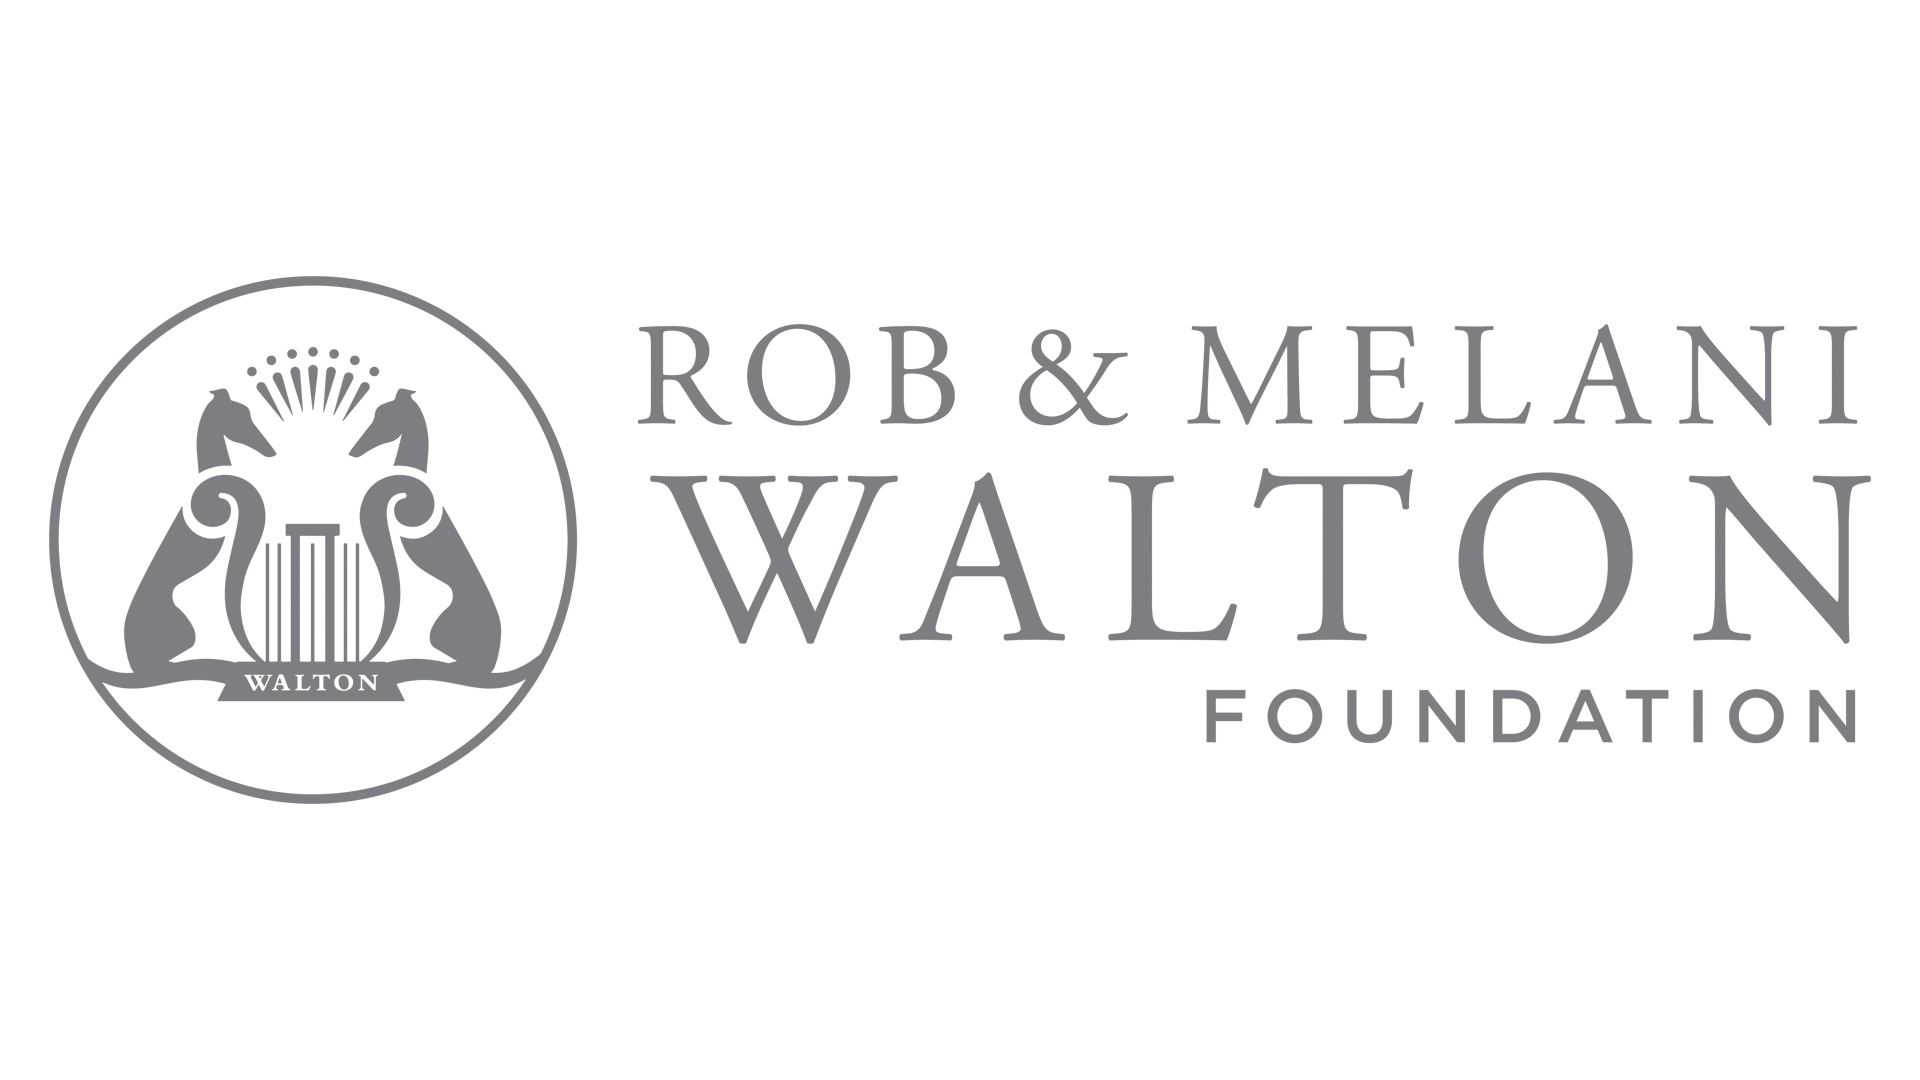 Rob & Melani Walton Foundation